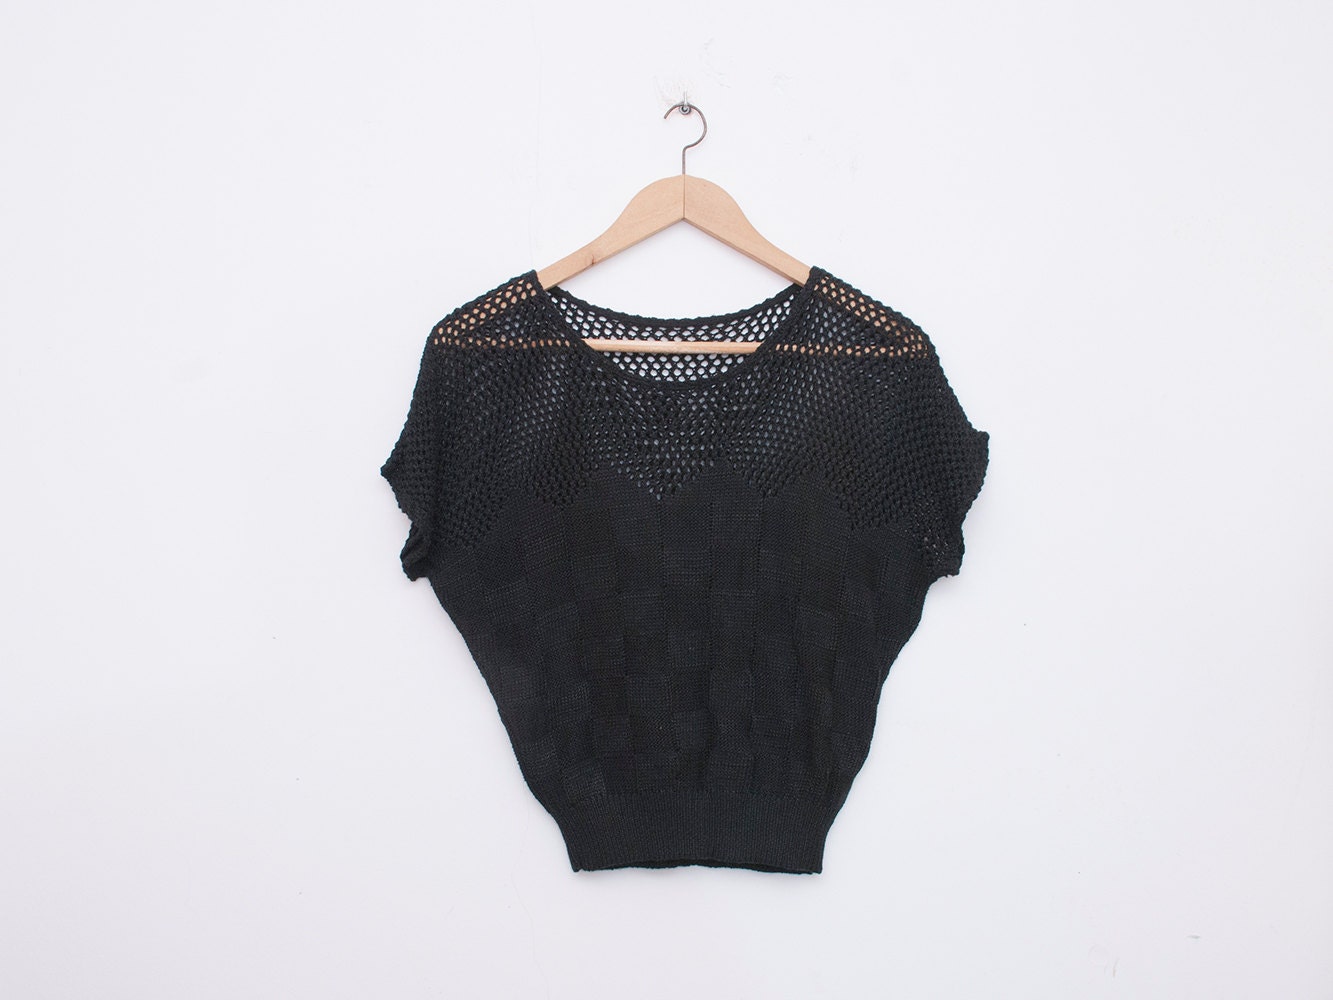 NOS vintage 80s black knit top sweater size S - blessthatdress